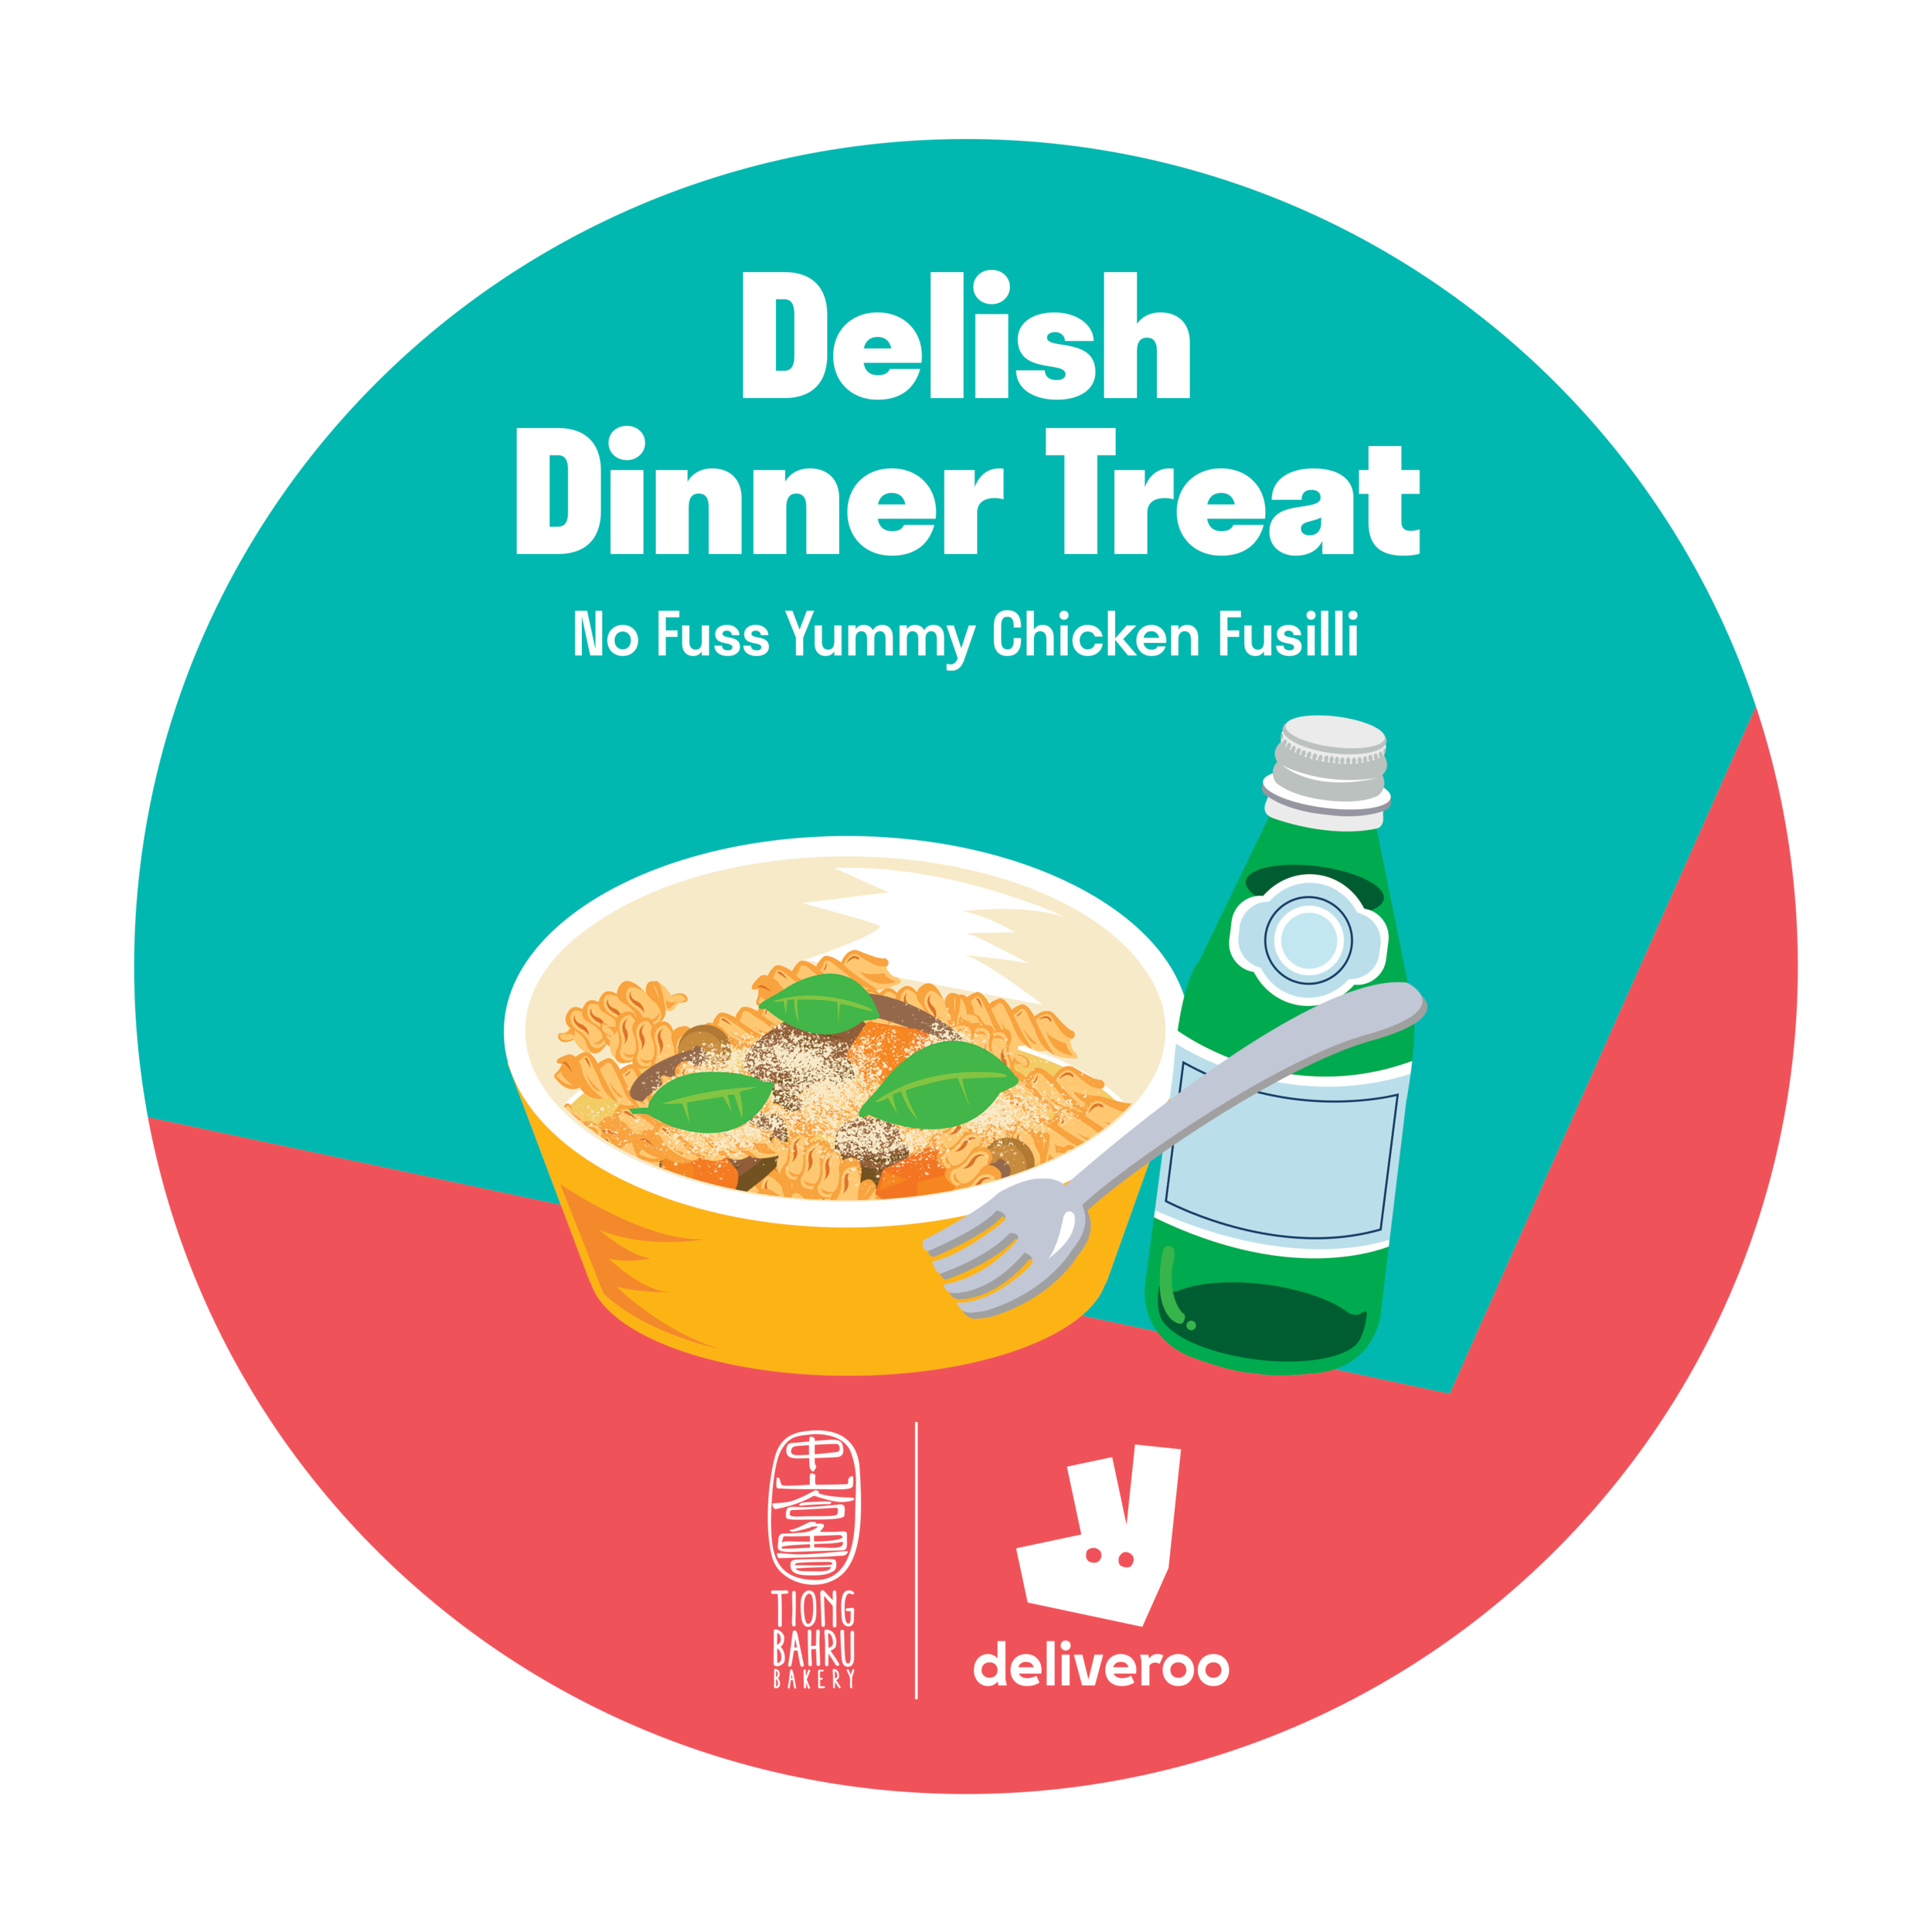 190517_Deliveroo_Delish-Dinner-Treat_No-stars.png